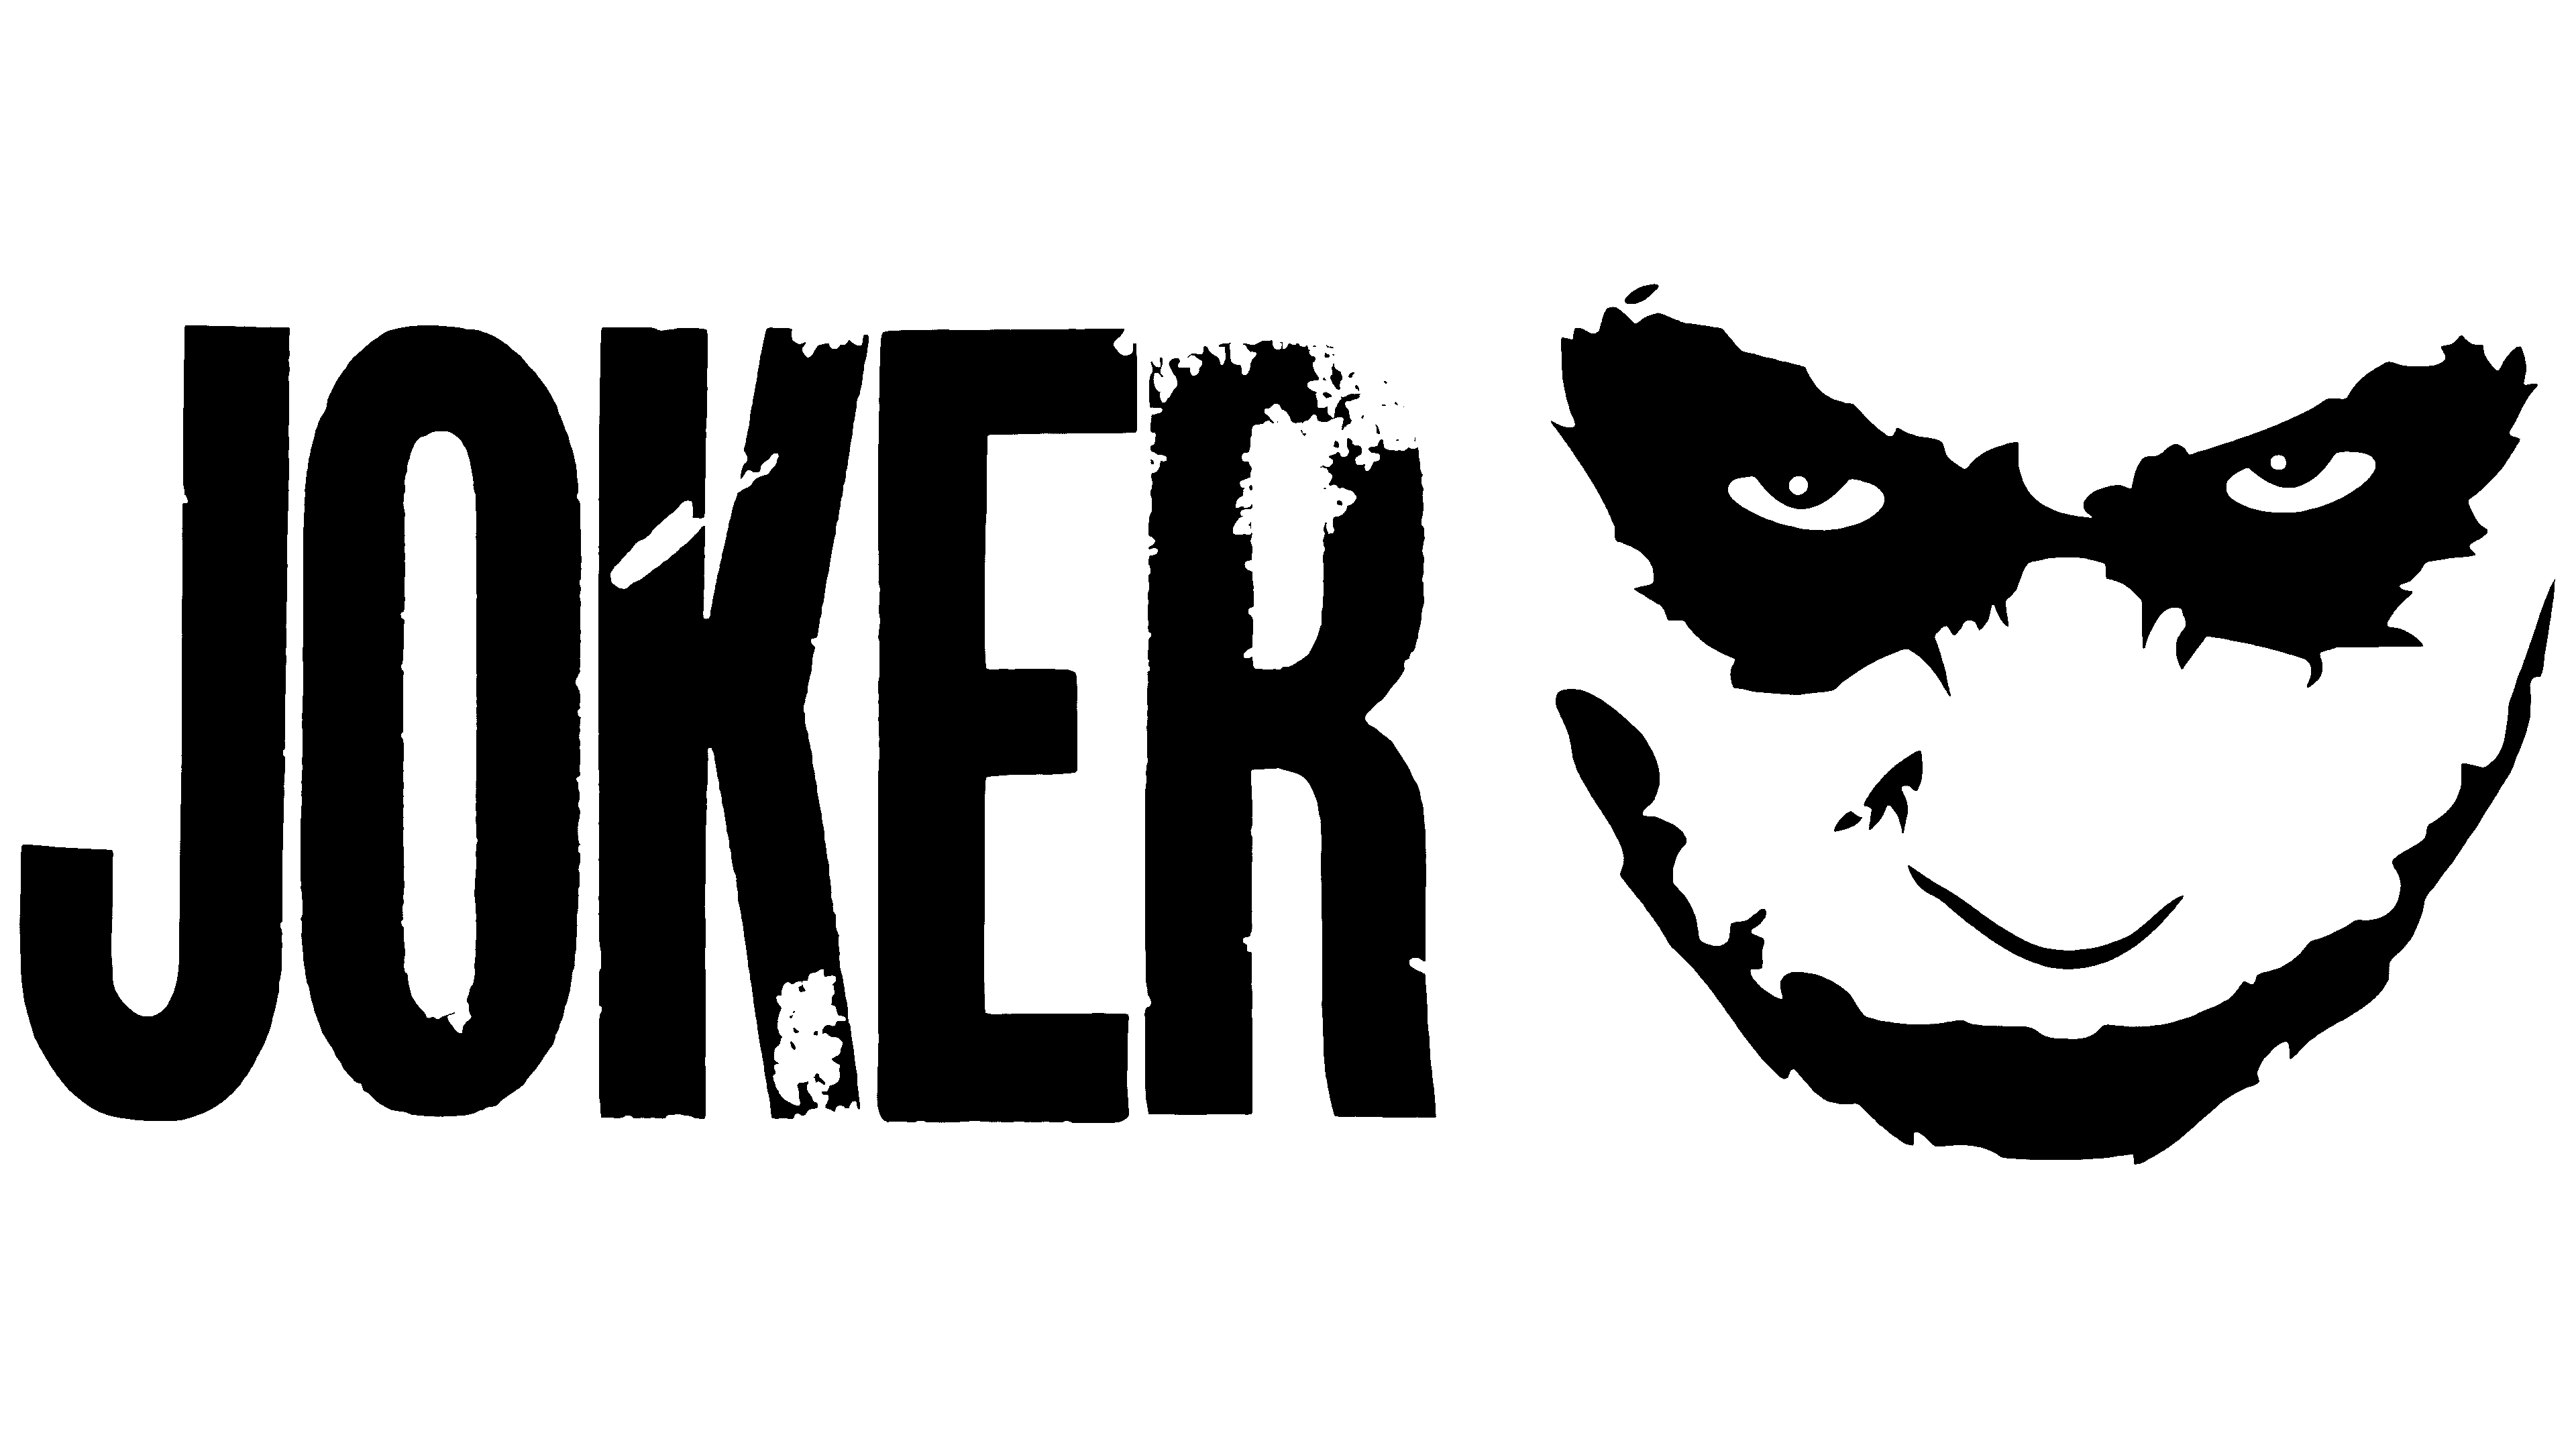 Joker clown face logo mascot design with black isolated background 7538089  Vector Art at Vecteezy